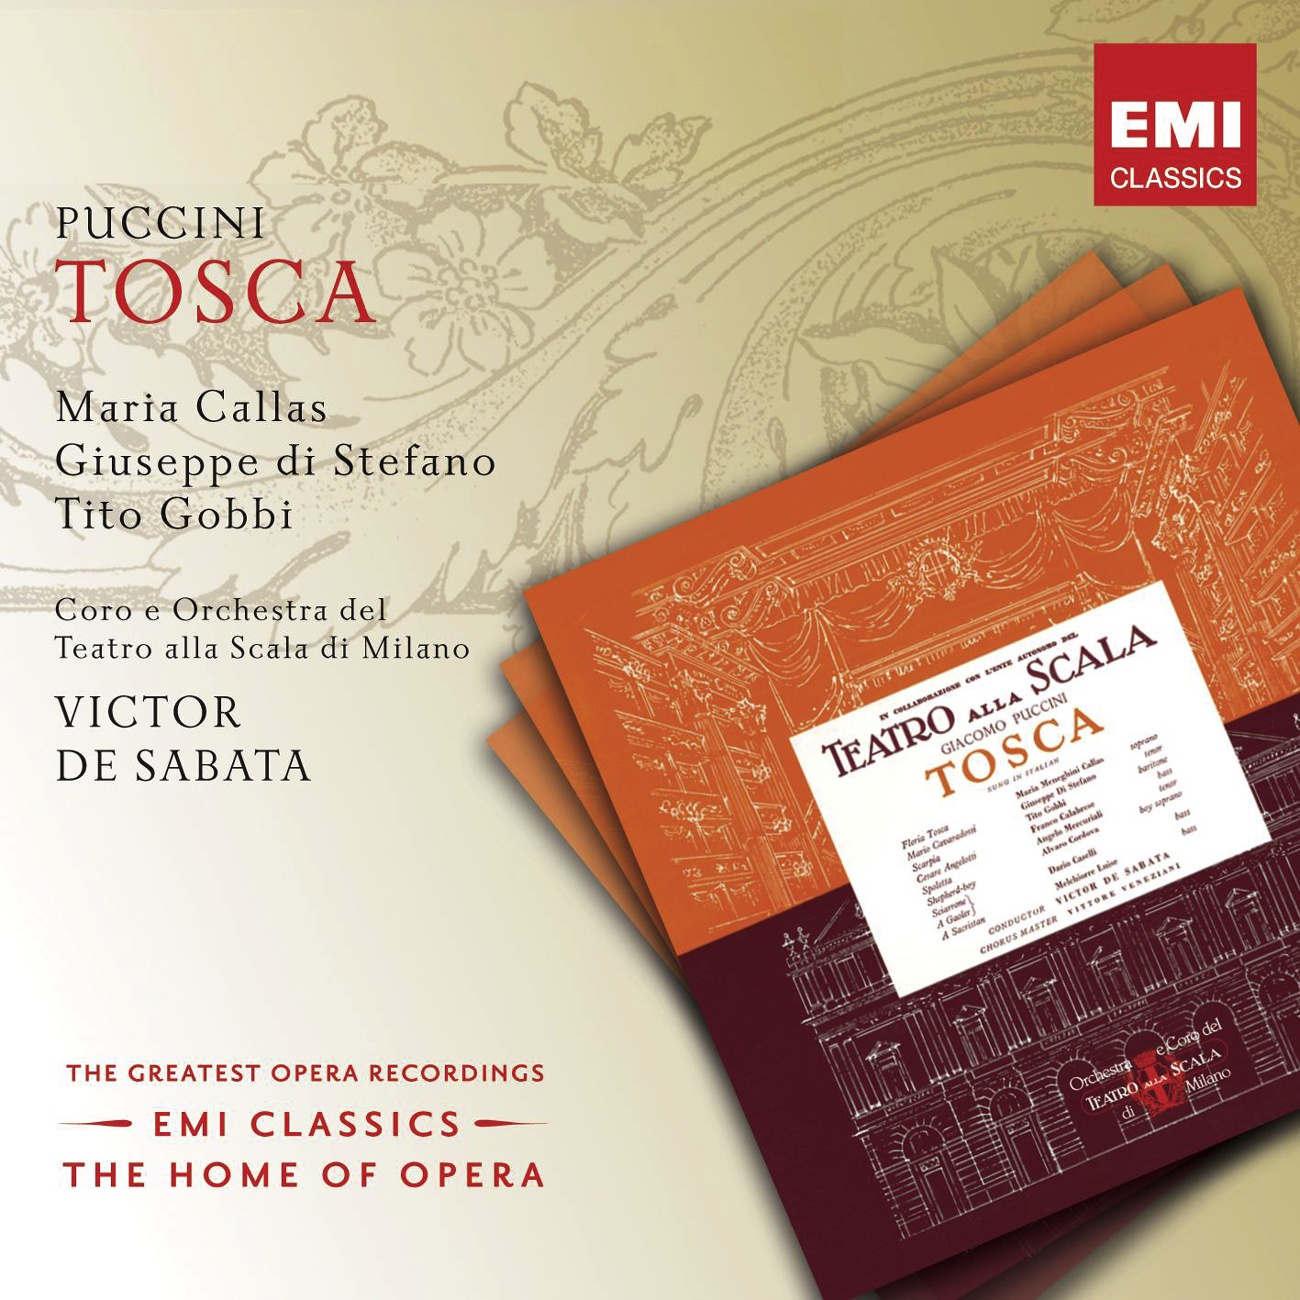 Tosca (2002 Digital Remaster), ACT ONE: Sante ampolle! Il suo ritratto! (Sagrestano/Cavaradossi)